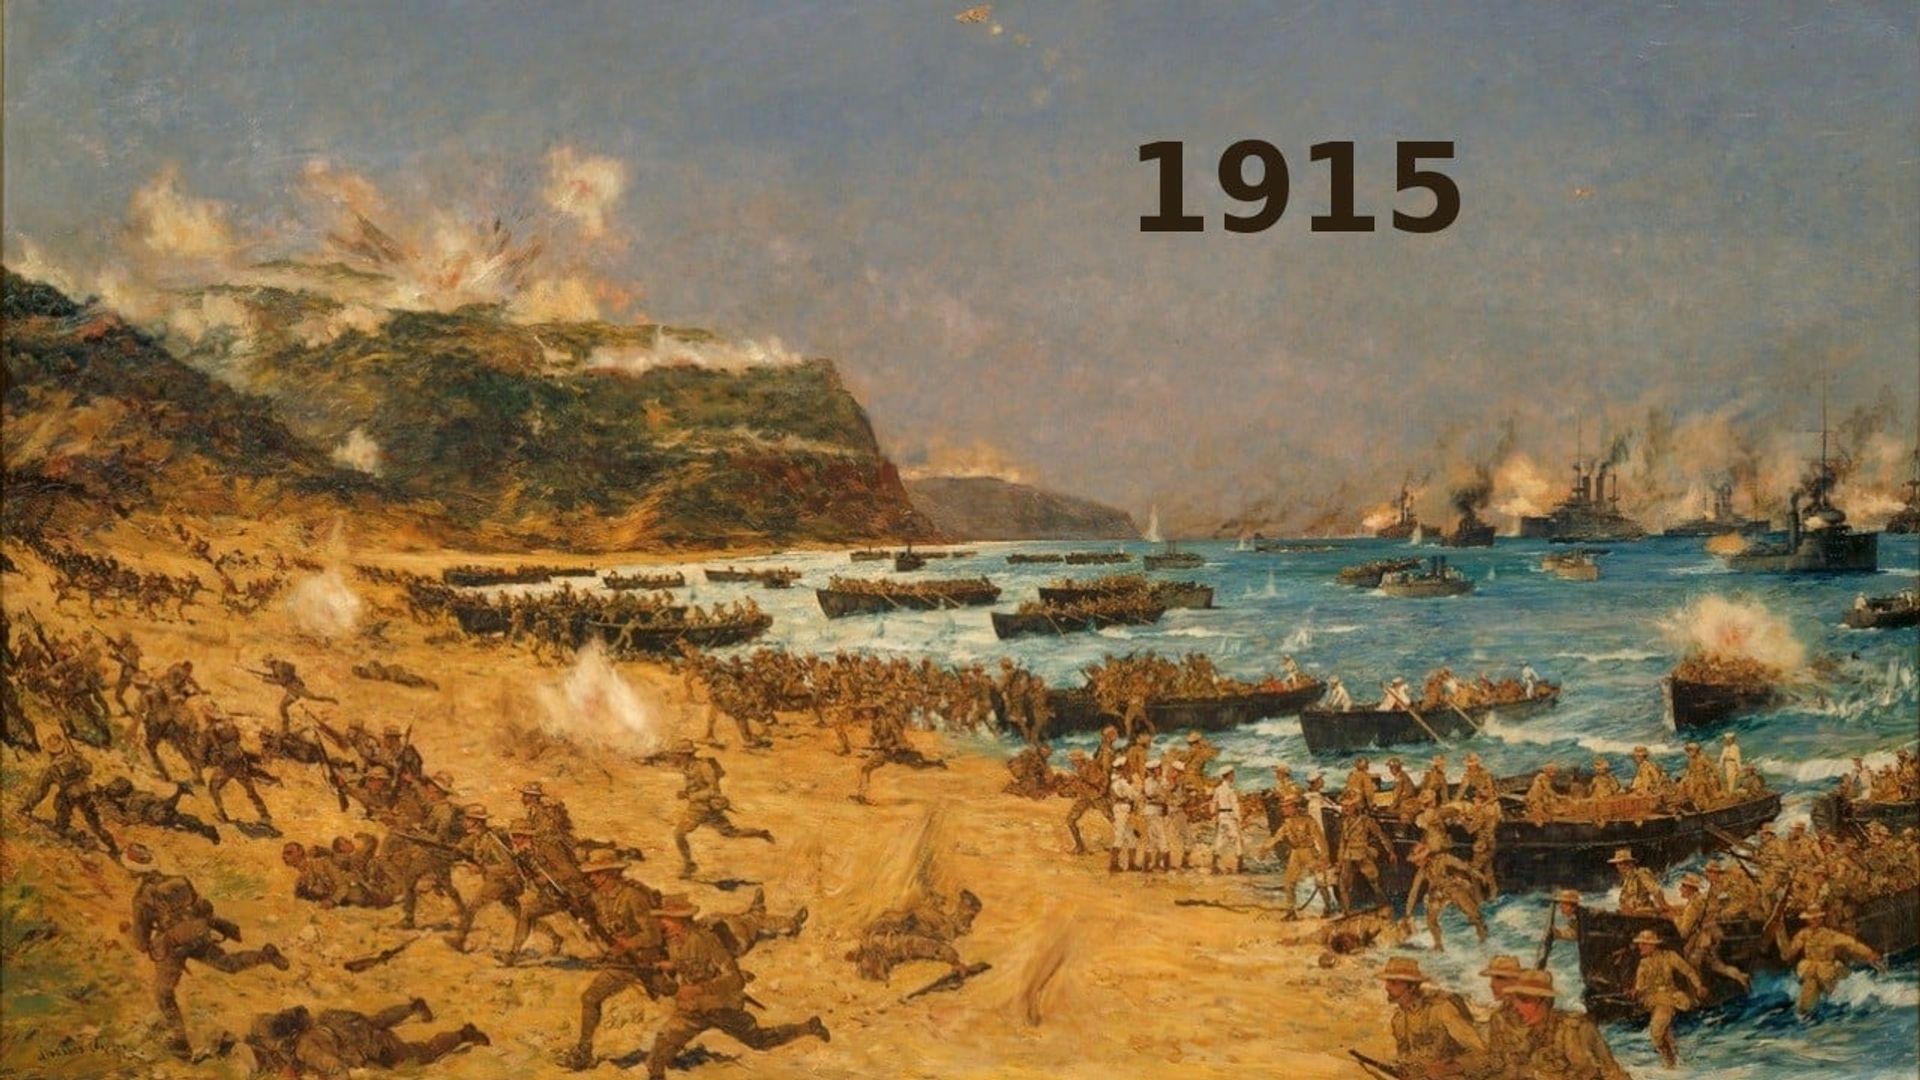 1915 background